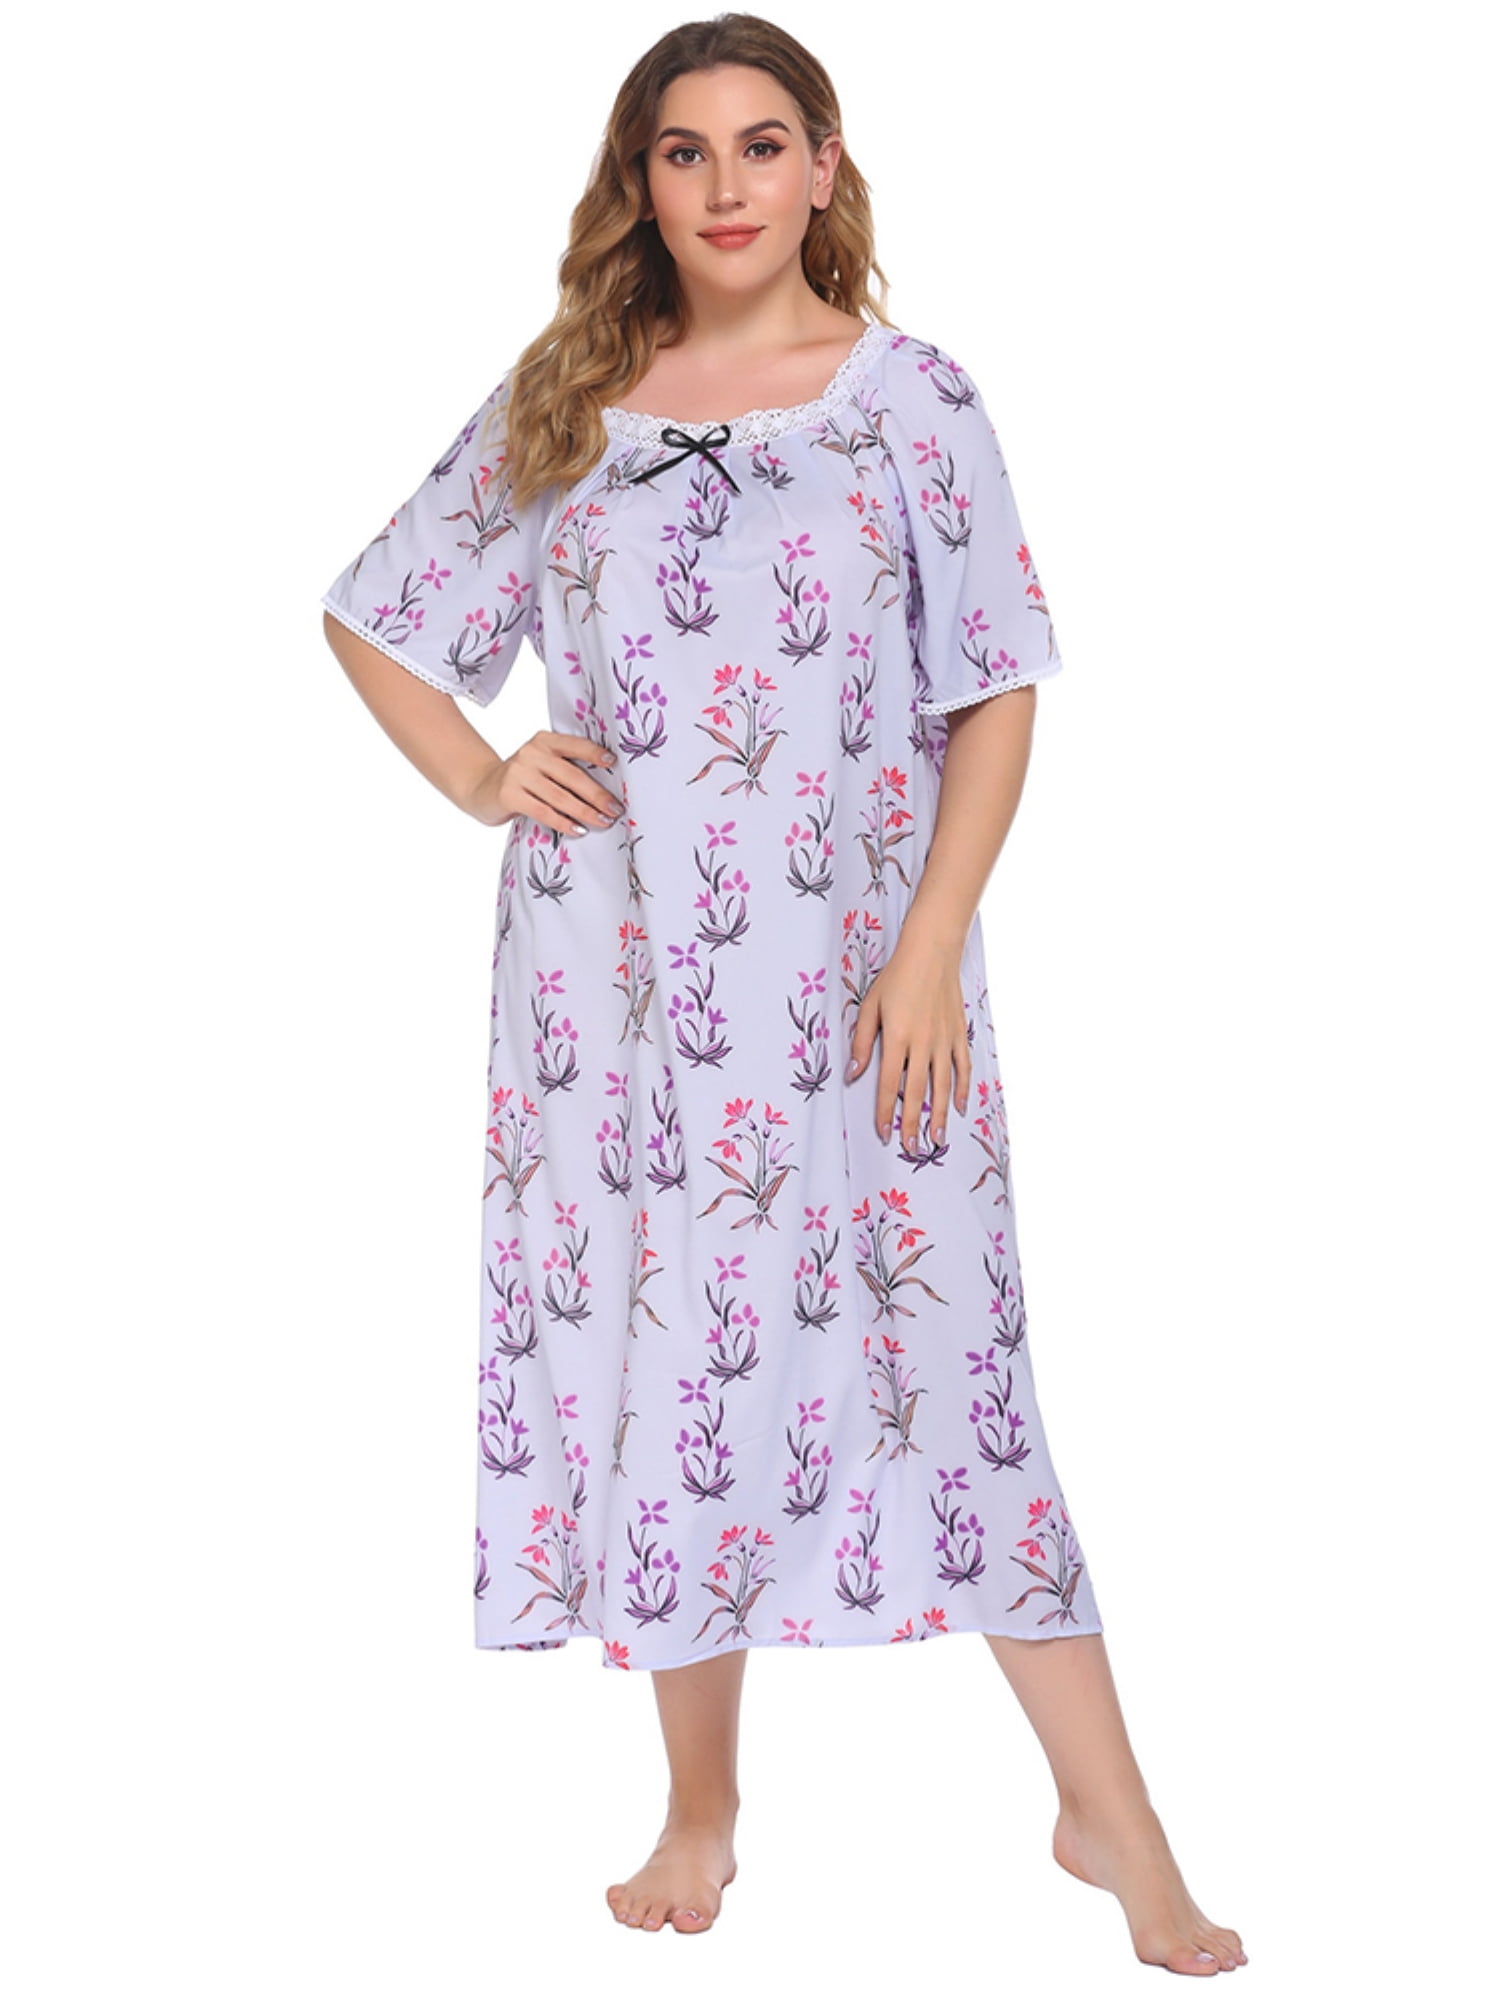 Women Vintage Chemises Victorian Nightgown Lace Flower Embroidery Sleepwear Night Sleepdress Loungewear